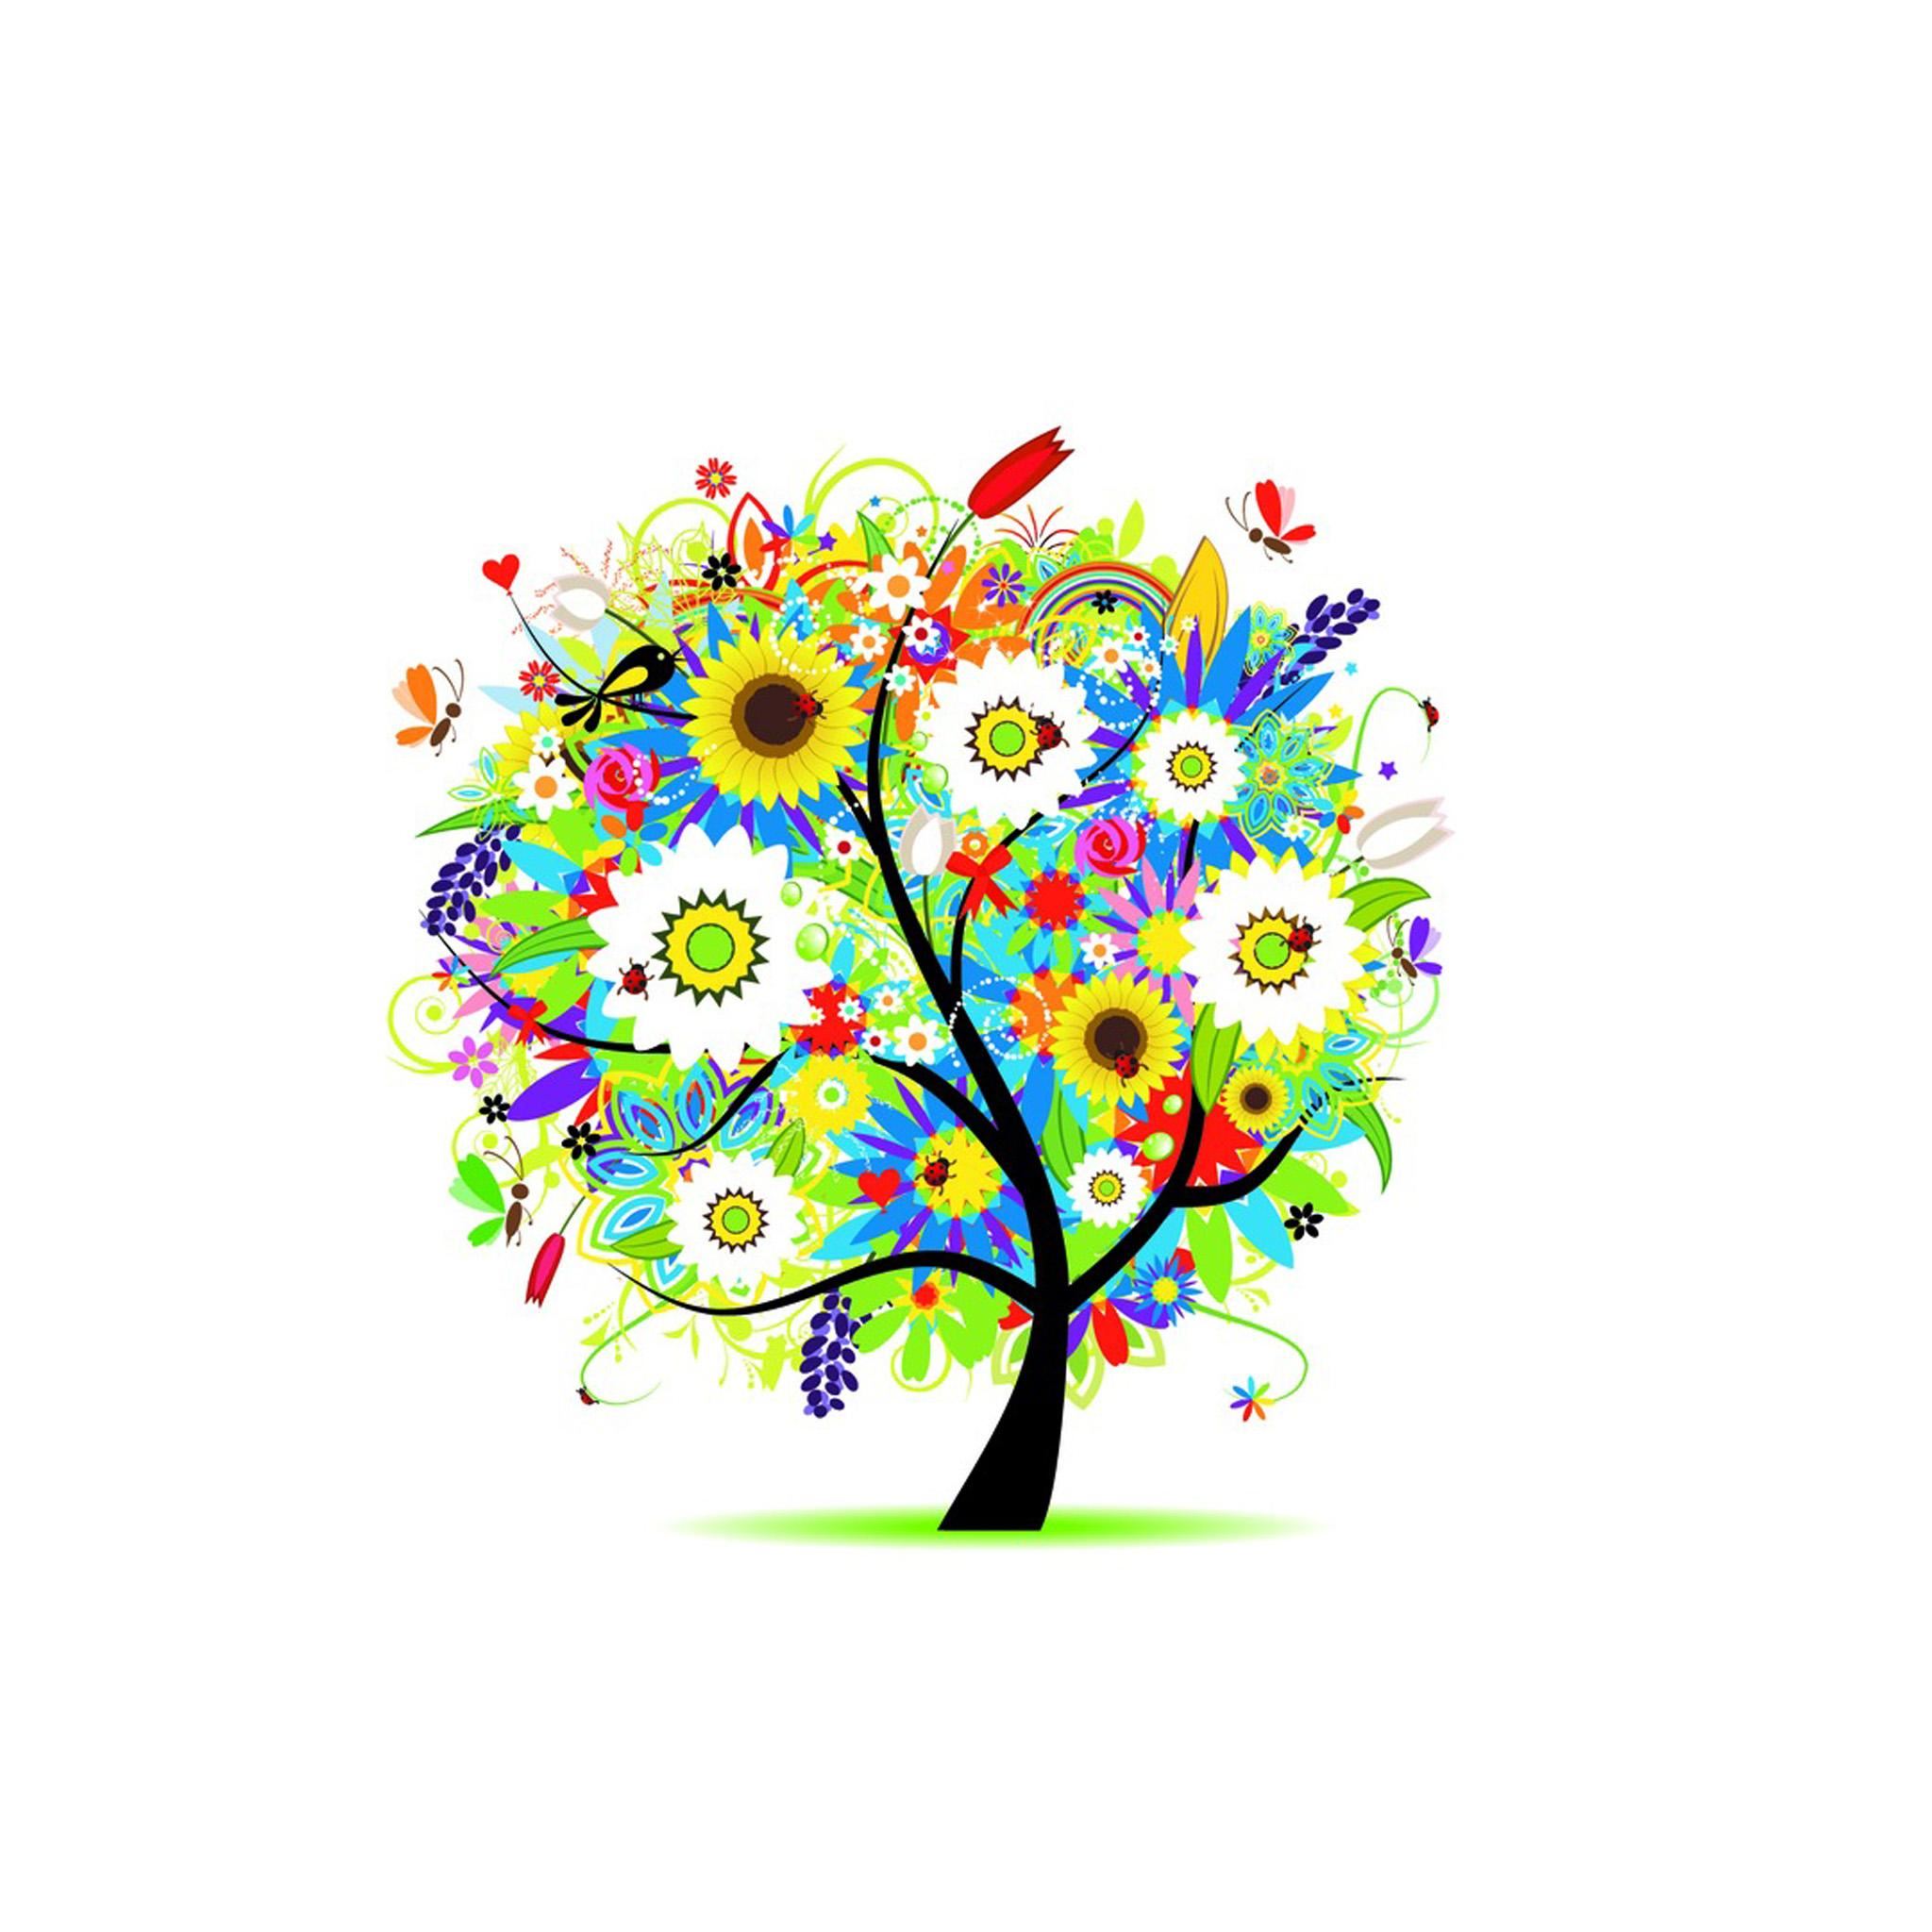 Colorful Flowers Tree Design Art iPad Air Wallpaper Free Download